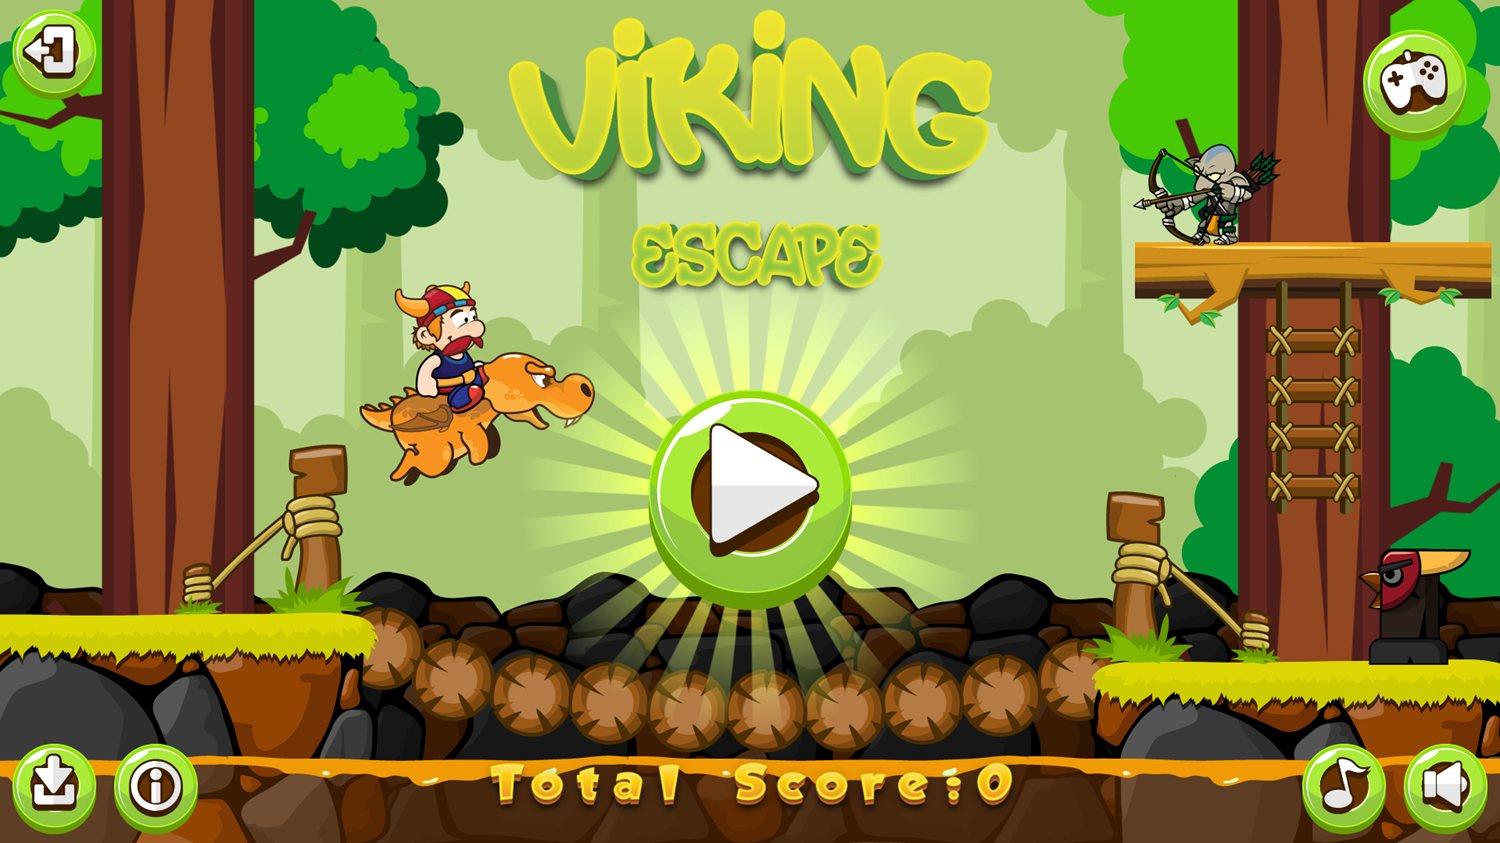 Viking Escape Game Welcome Screen Screenshot.